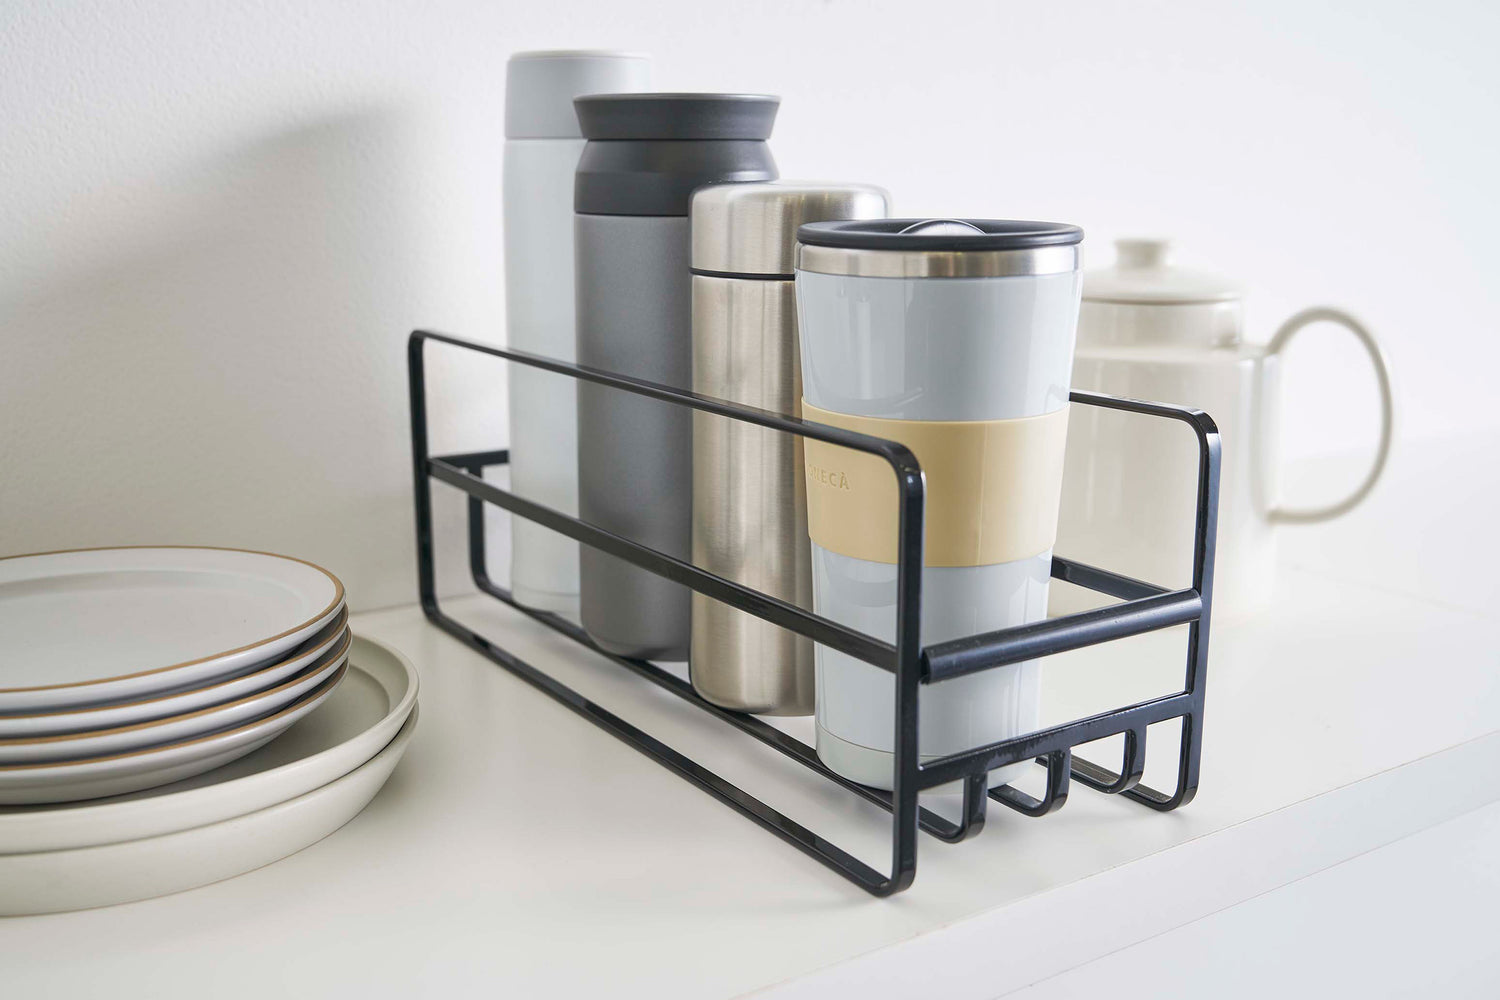 View 14 - Close up of Yamazaki Home black Glass and Mug Cabinet Organizer next to plates on a shelf